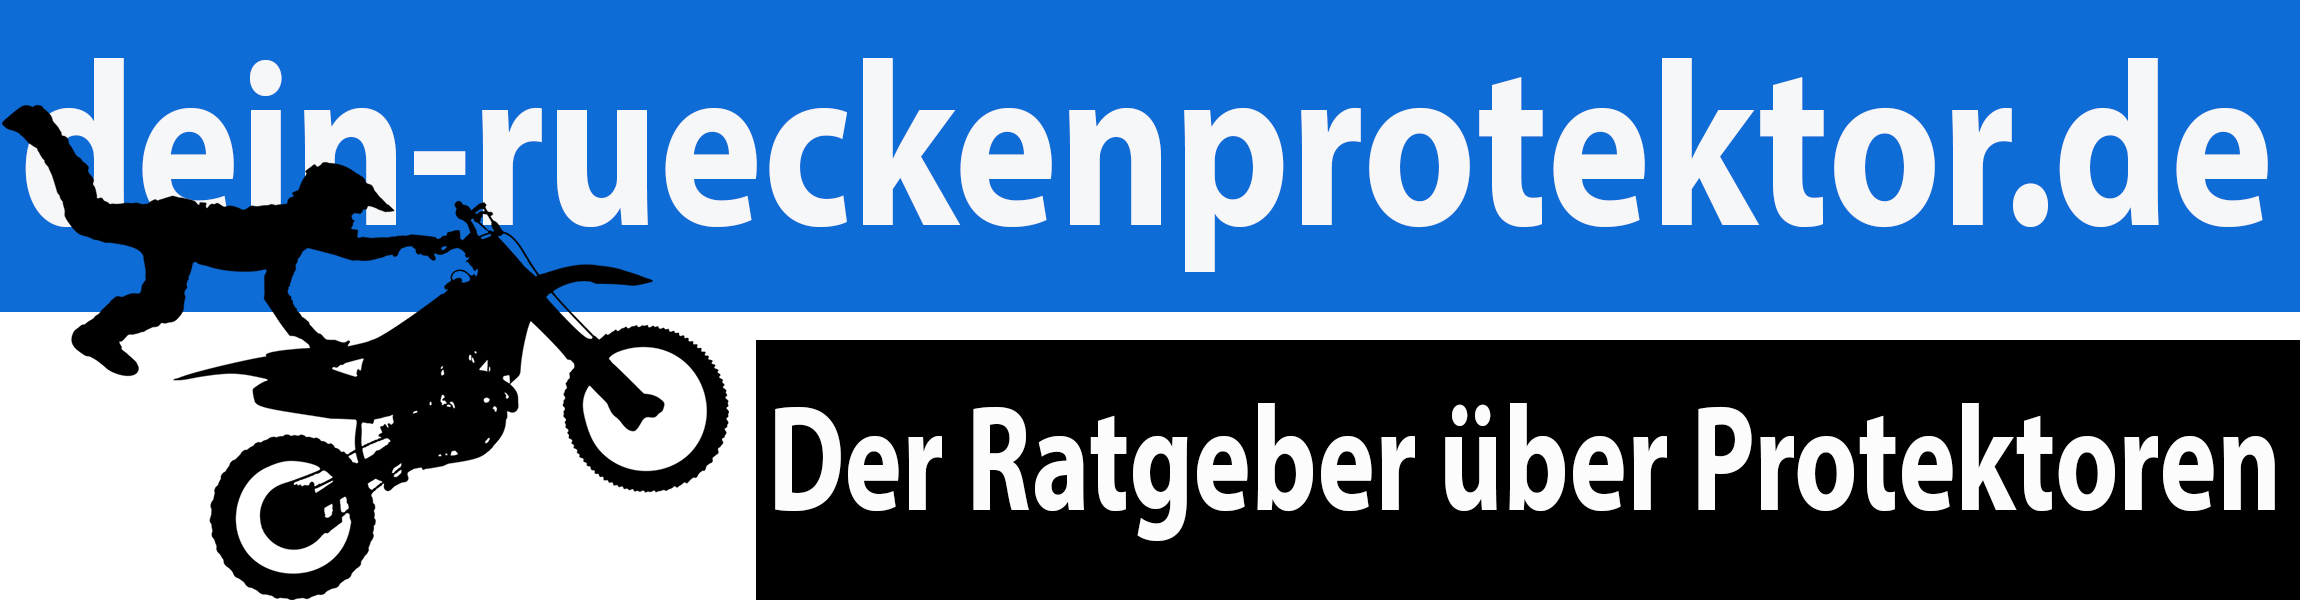 rückenprotektor-logo2